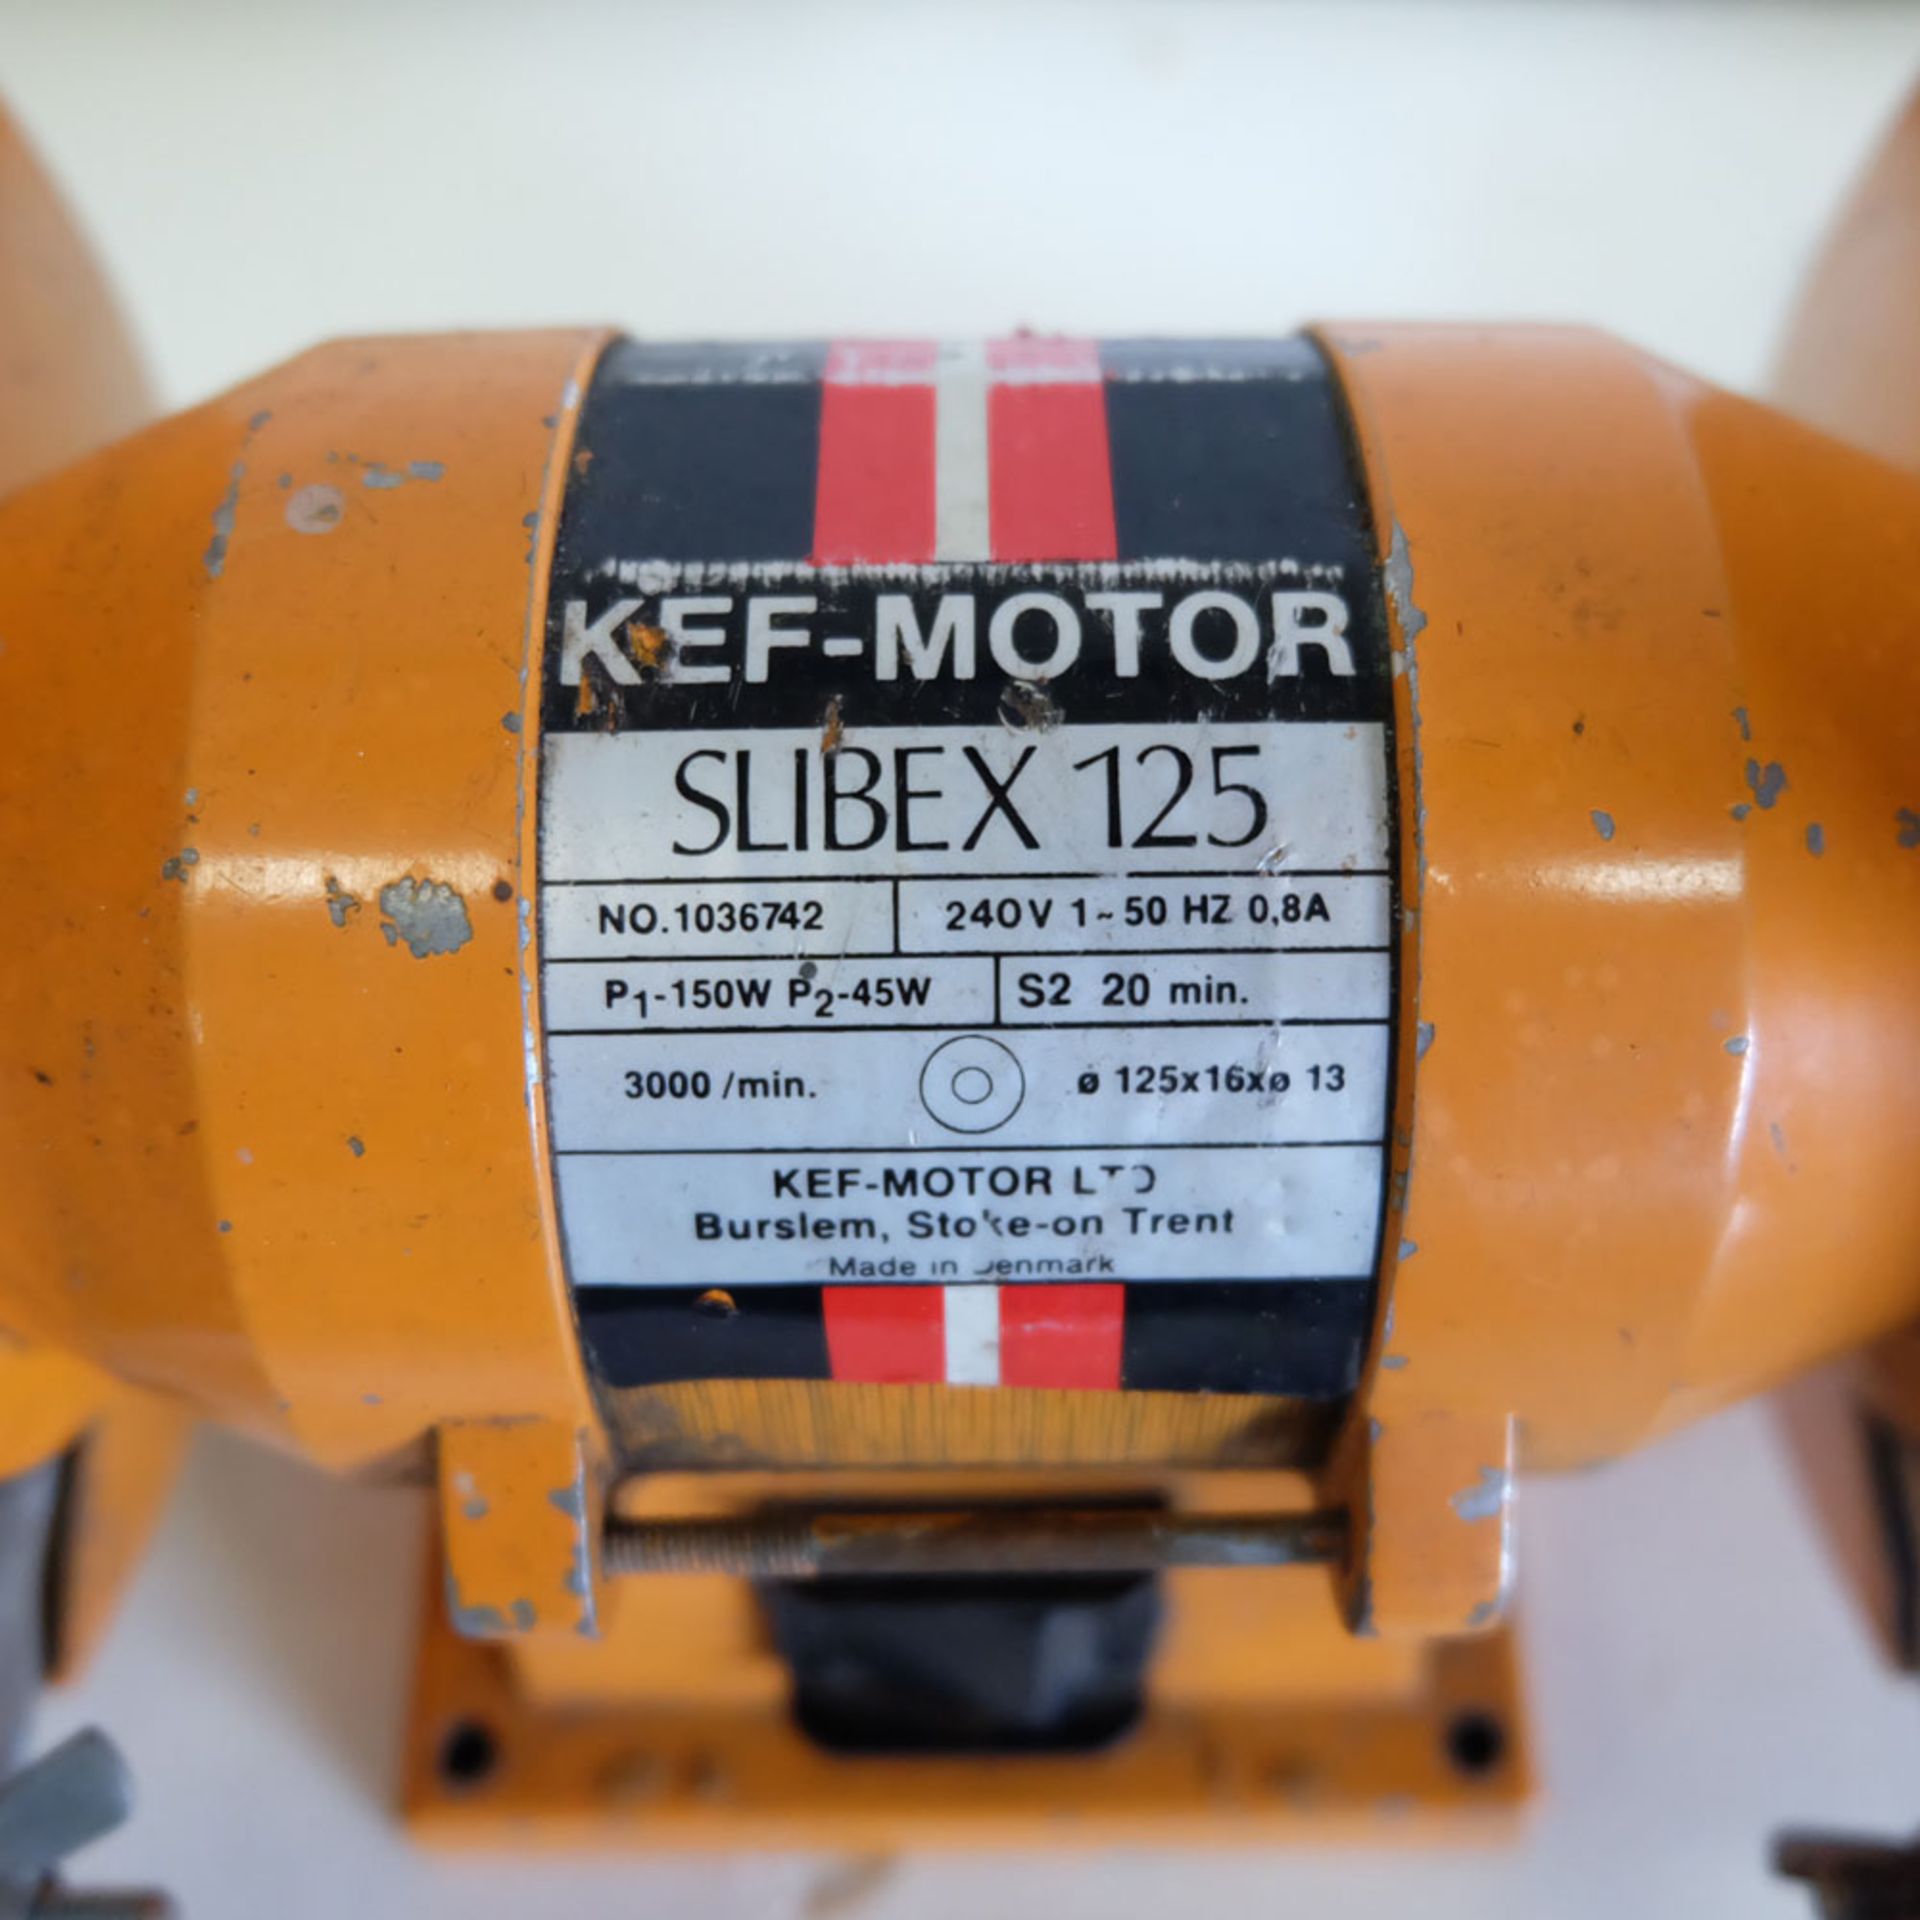 KEF-MOTOR SLIBEX 125. Double Ended Tool Grinder. - Image 2 of 4